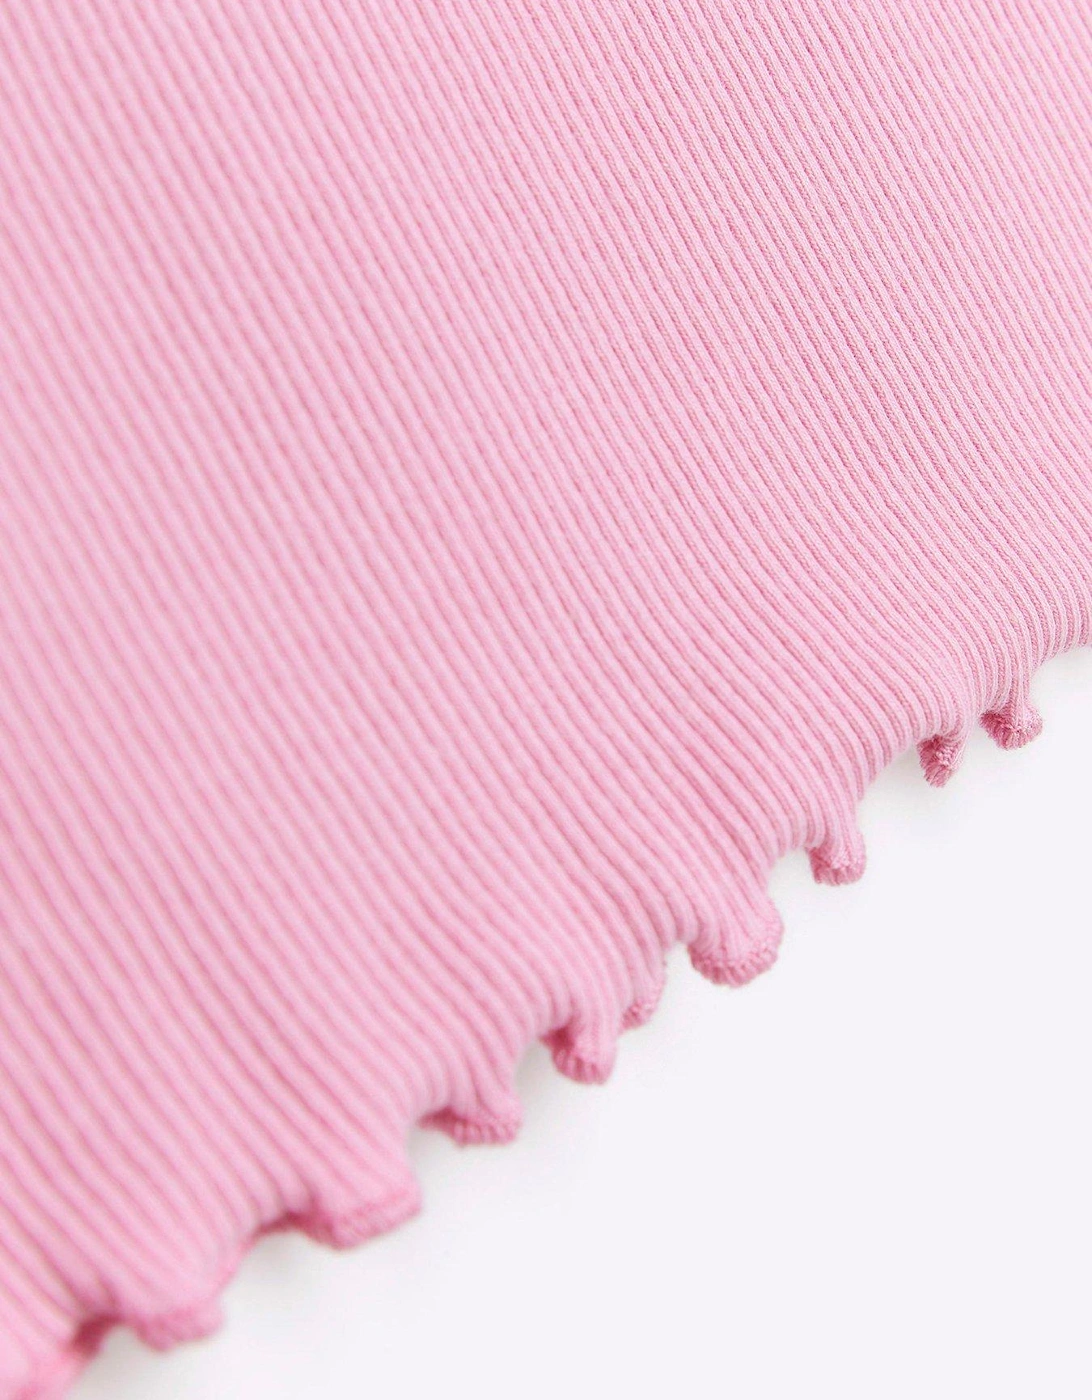 Girls Embroidered Logo Pink Crop T-Shirt - Pink